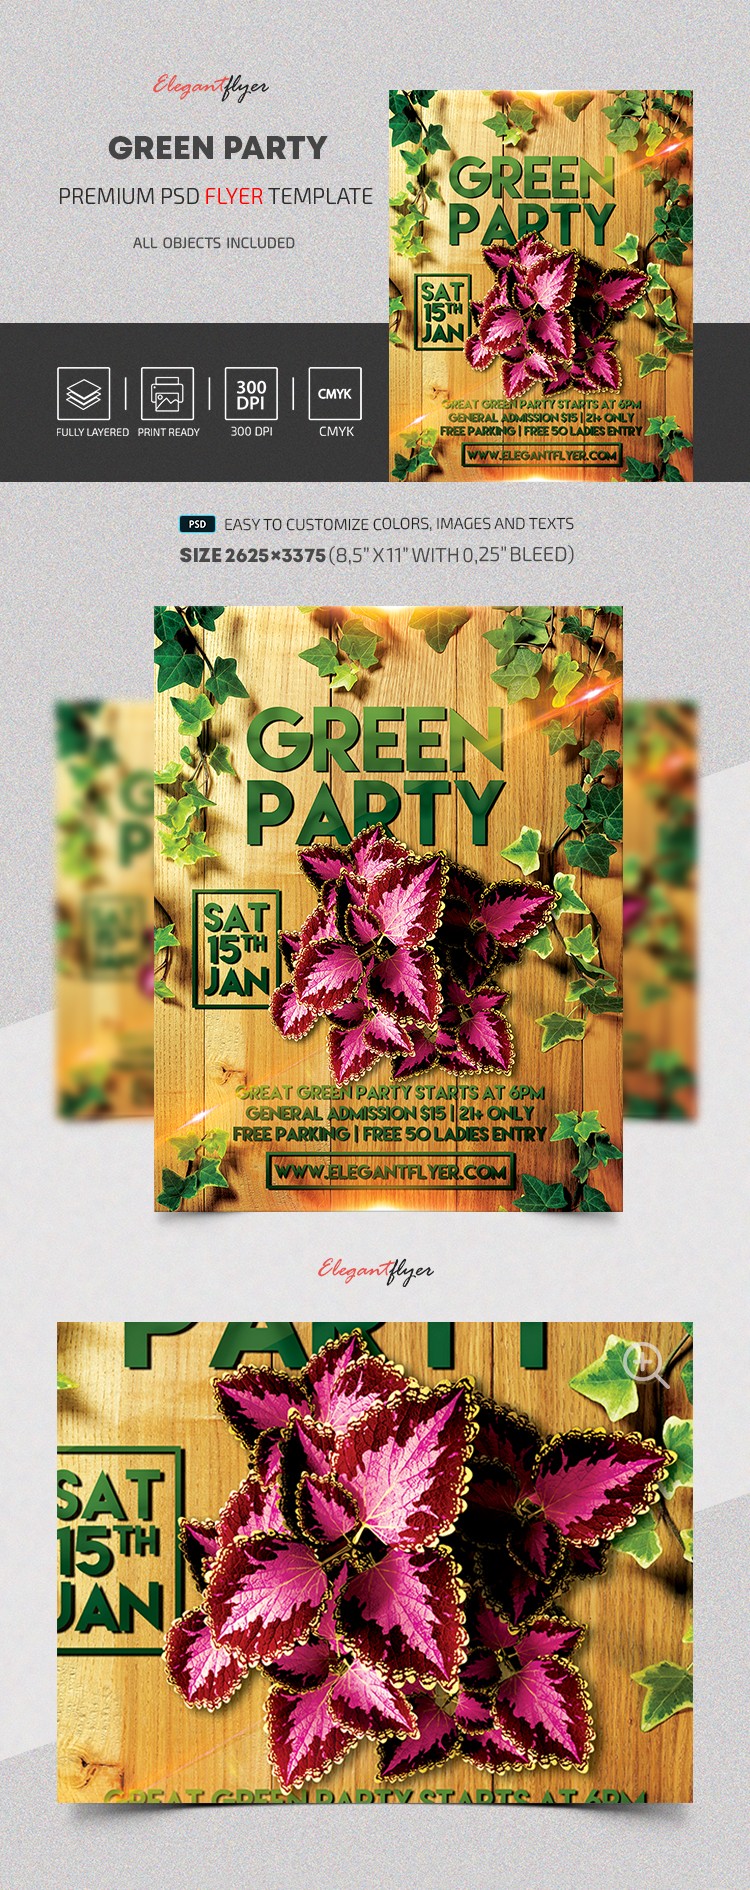 Green Party by ElegantFlyer